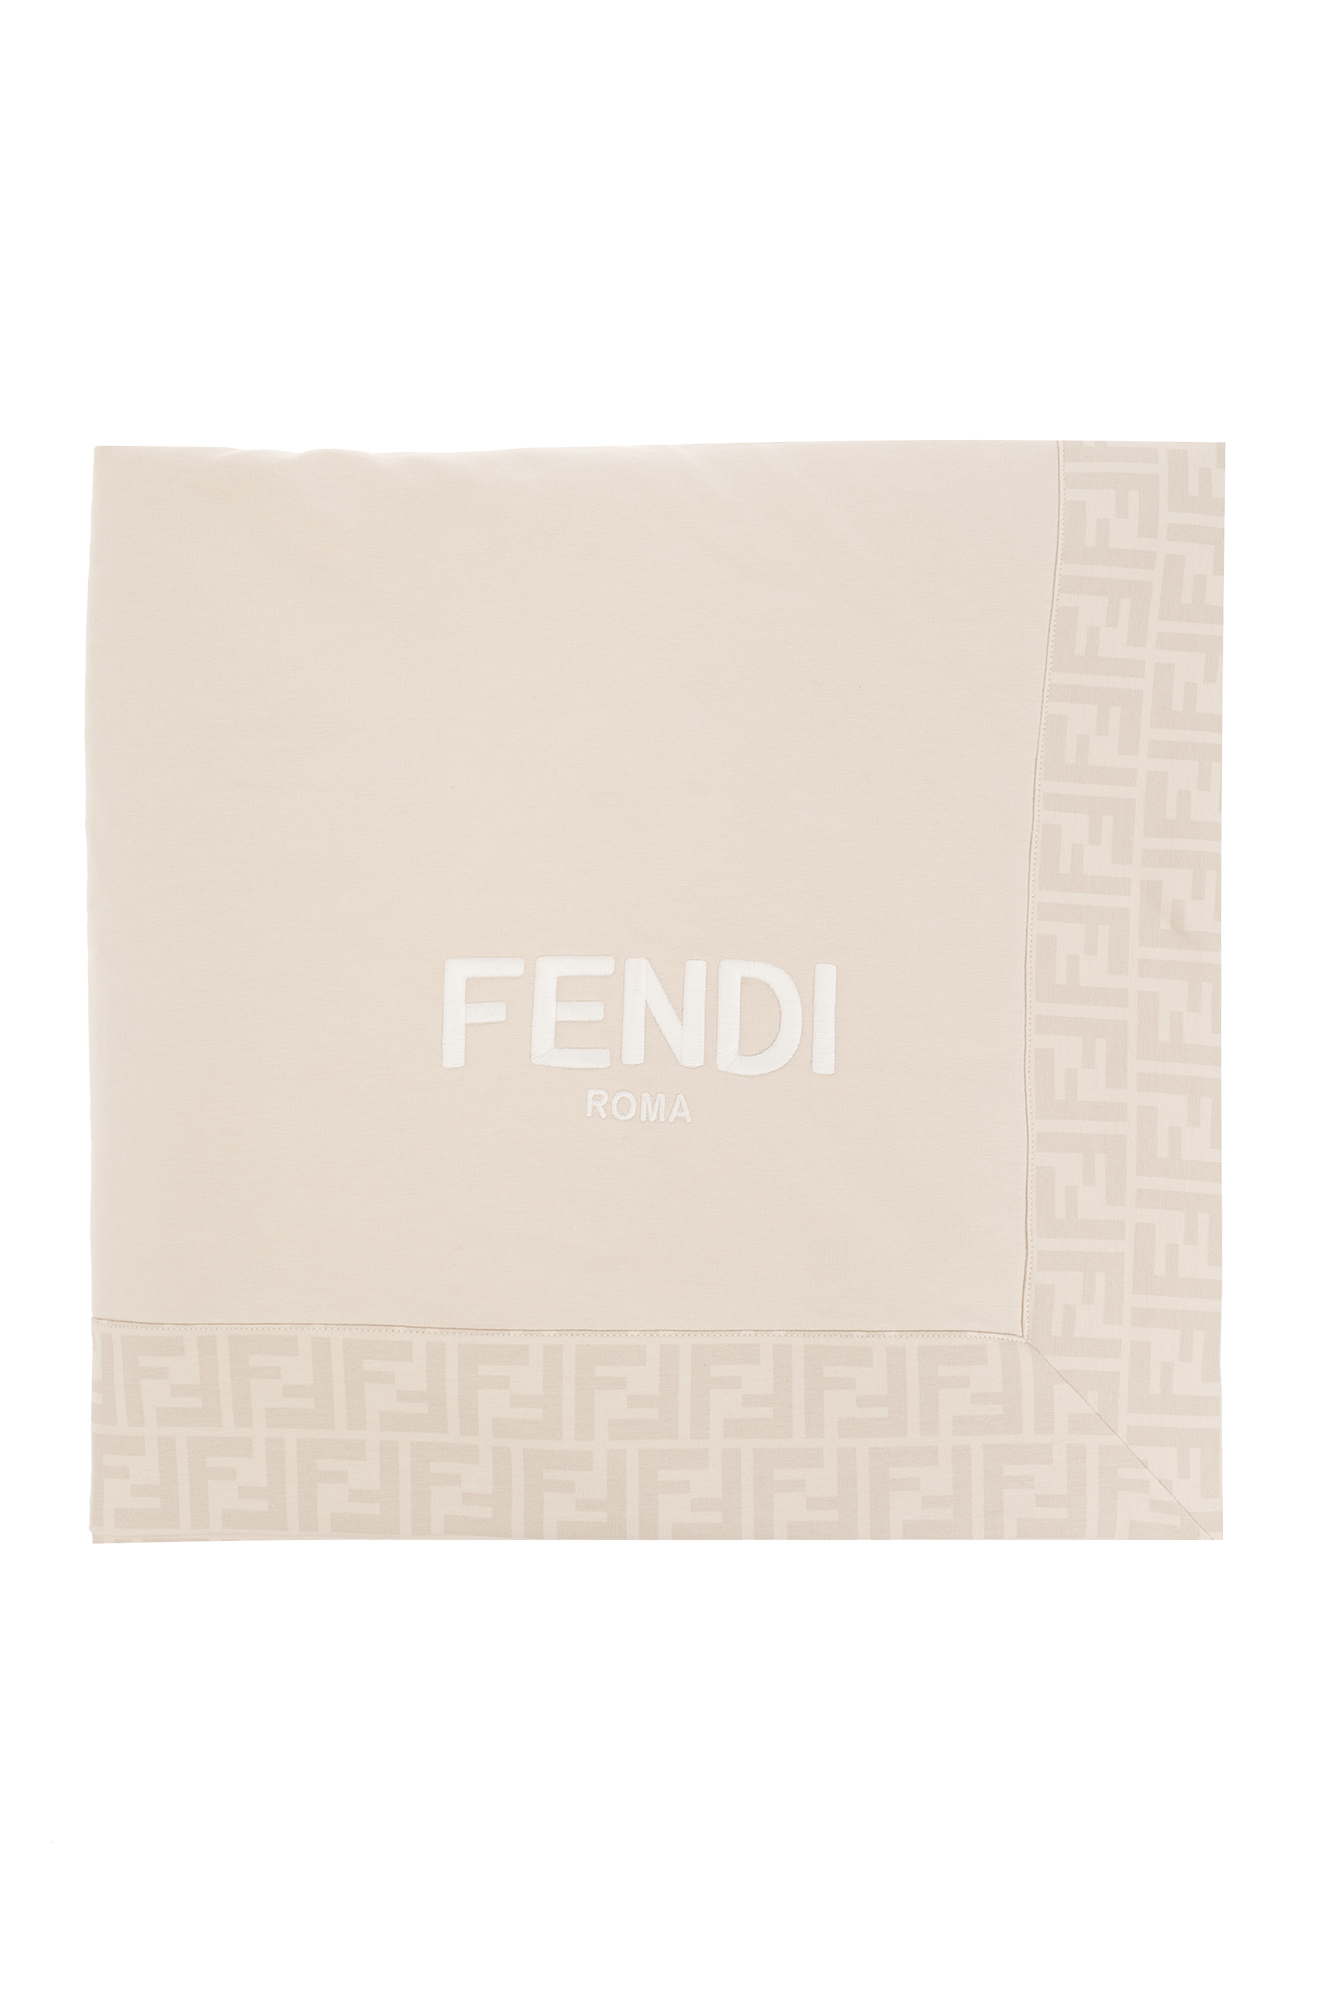 Fendi Kids Puffer robe coats and scuff slippers at Fendi fall '21 men's